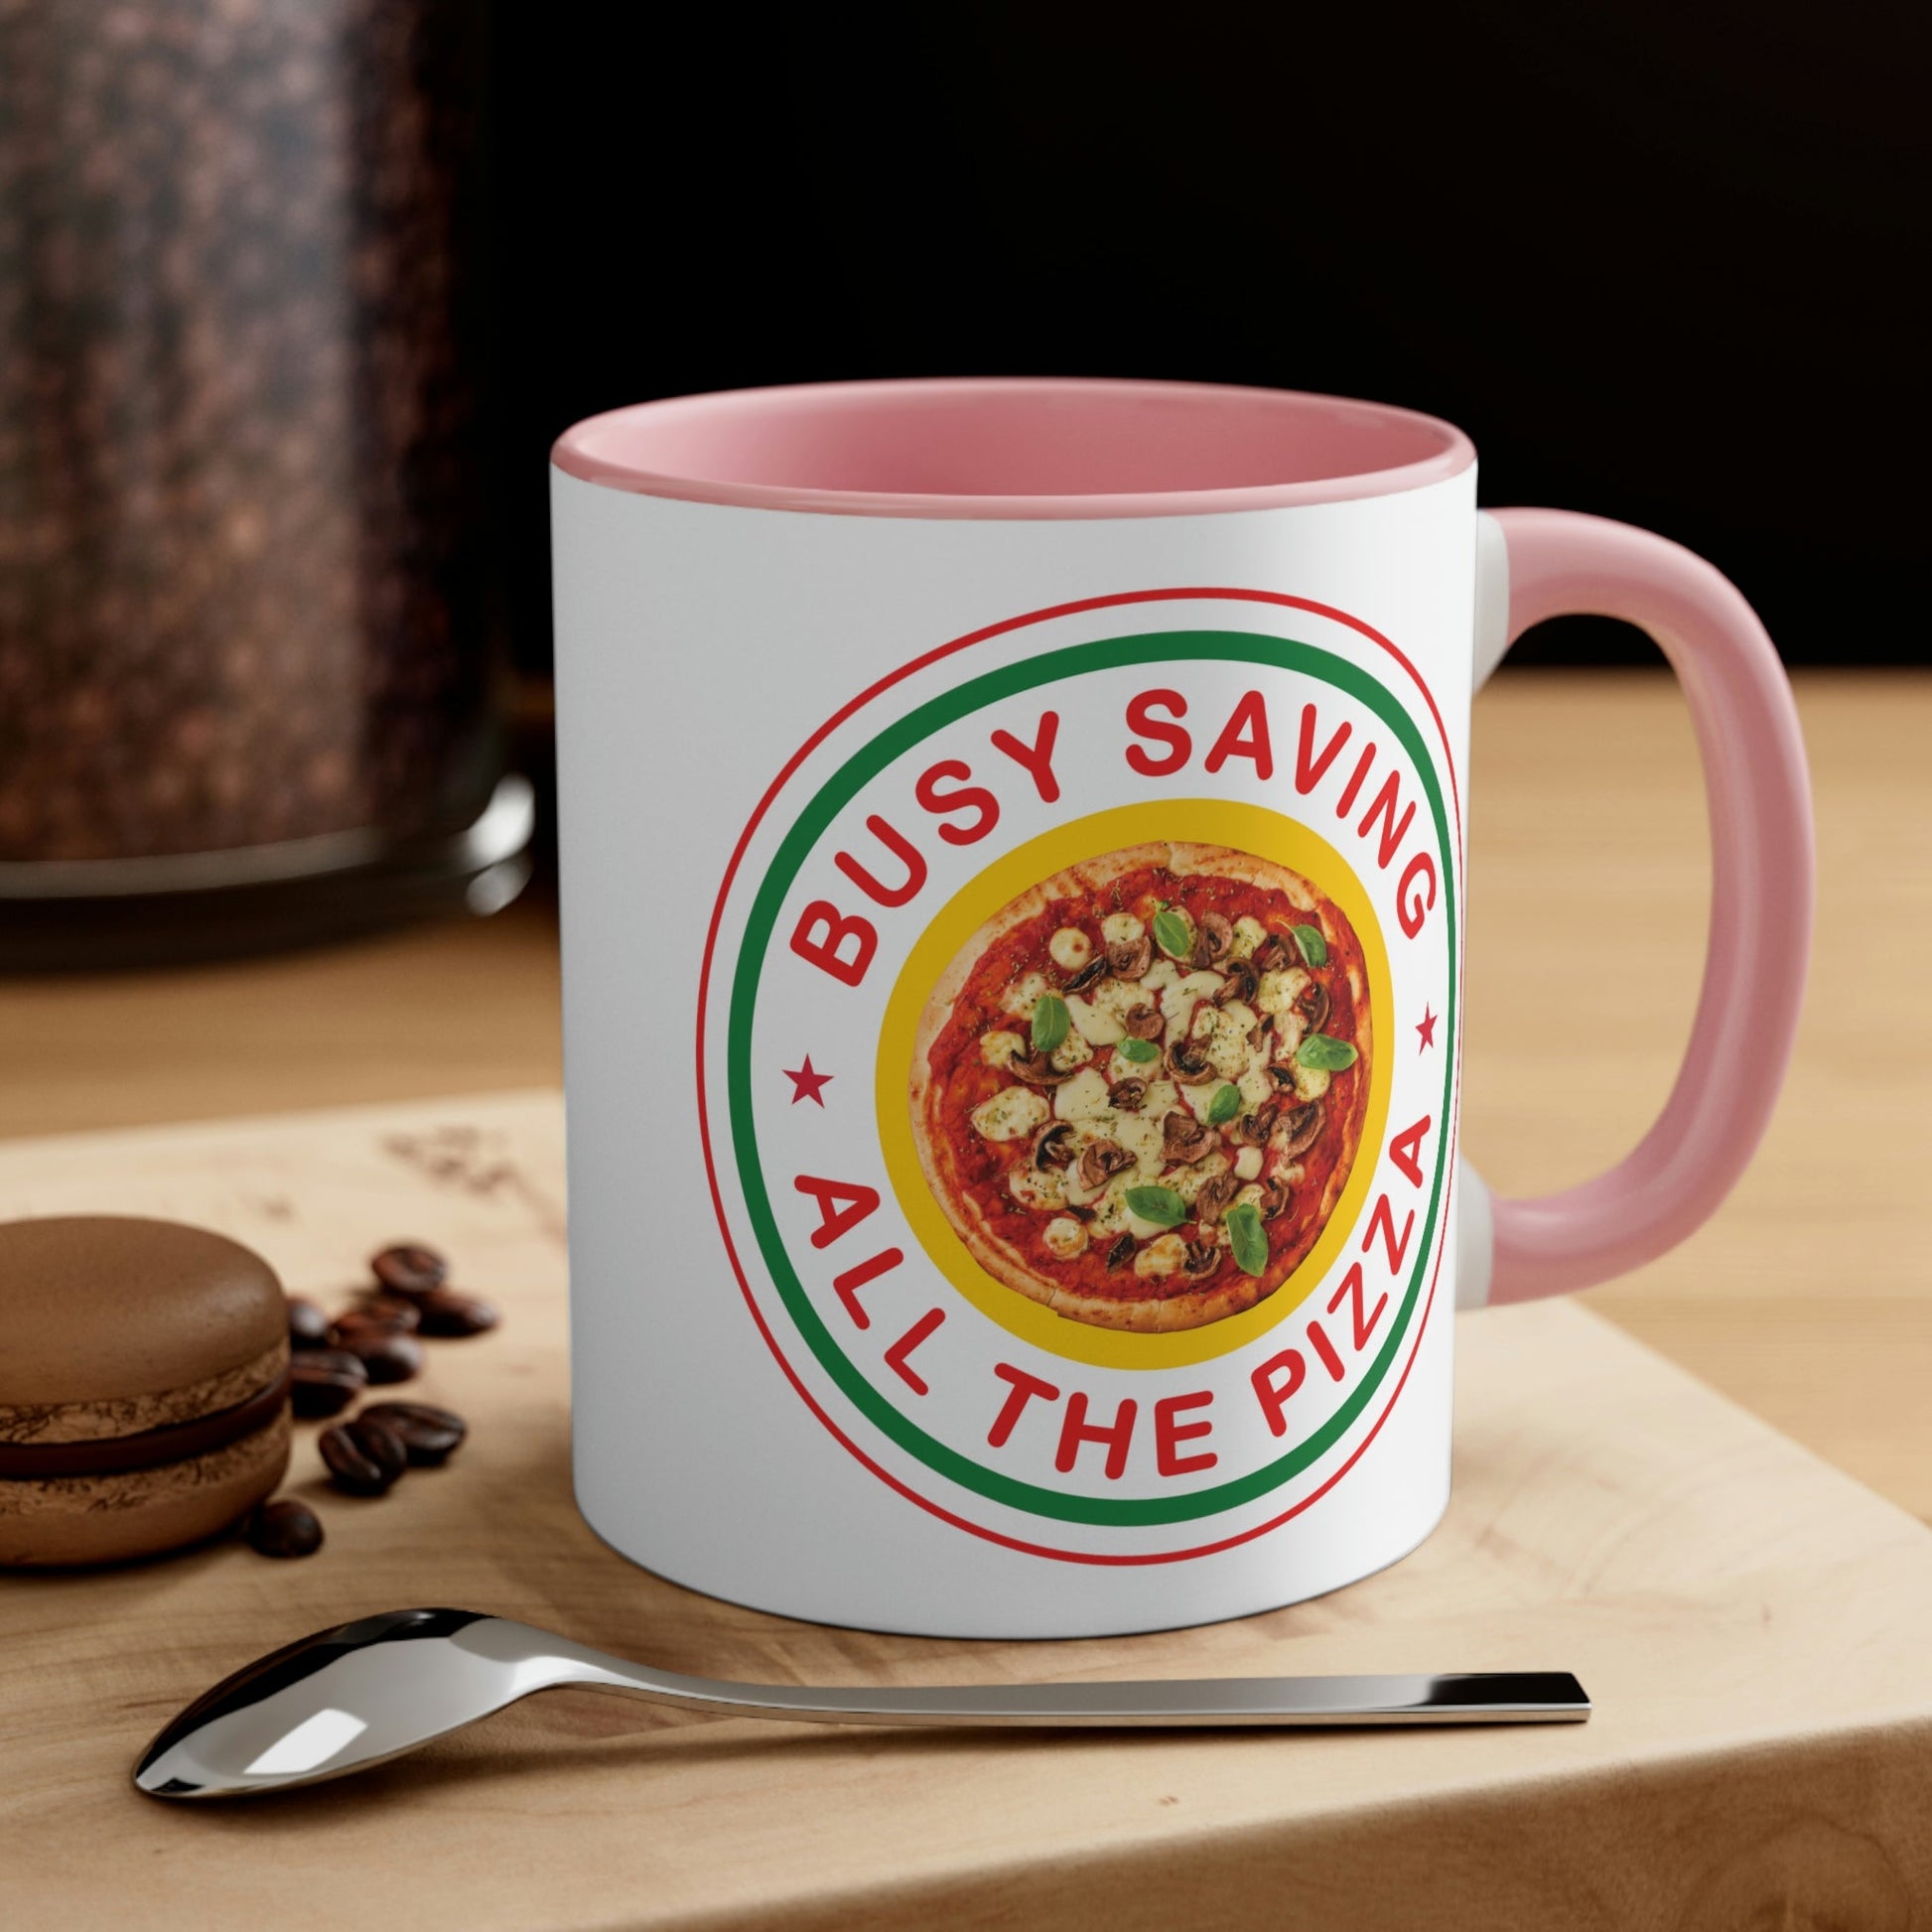 Busy Saving All The Pizza Food Lover Classic Accent Coffee Mug 11oz Ichaku [Perfect Gifts Selection]